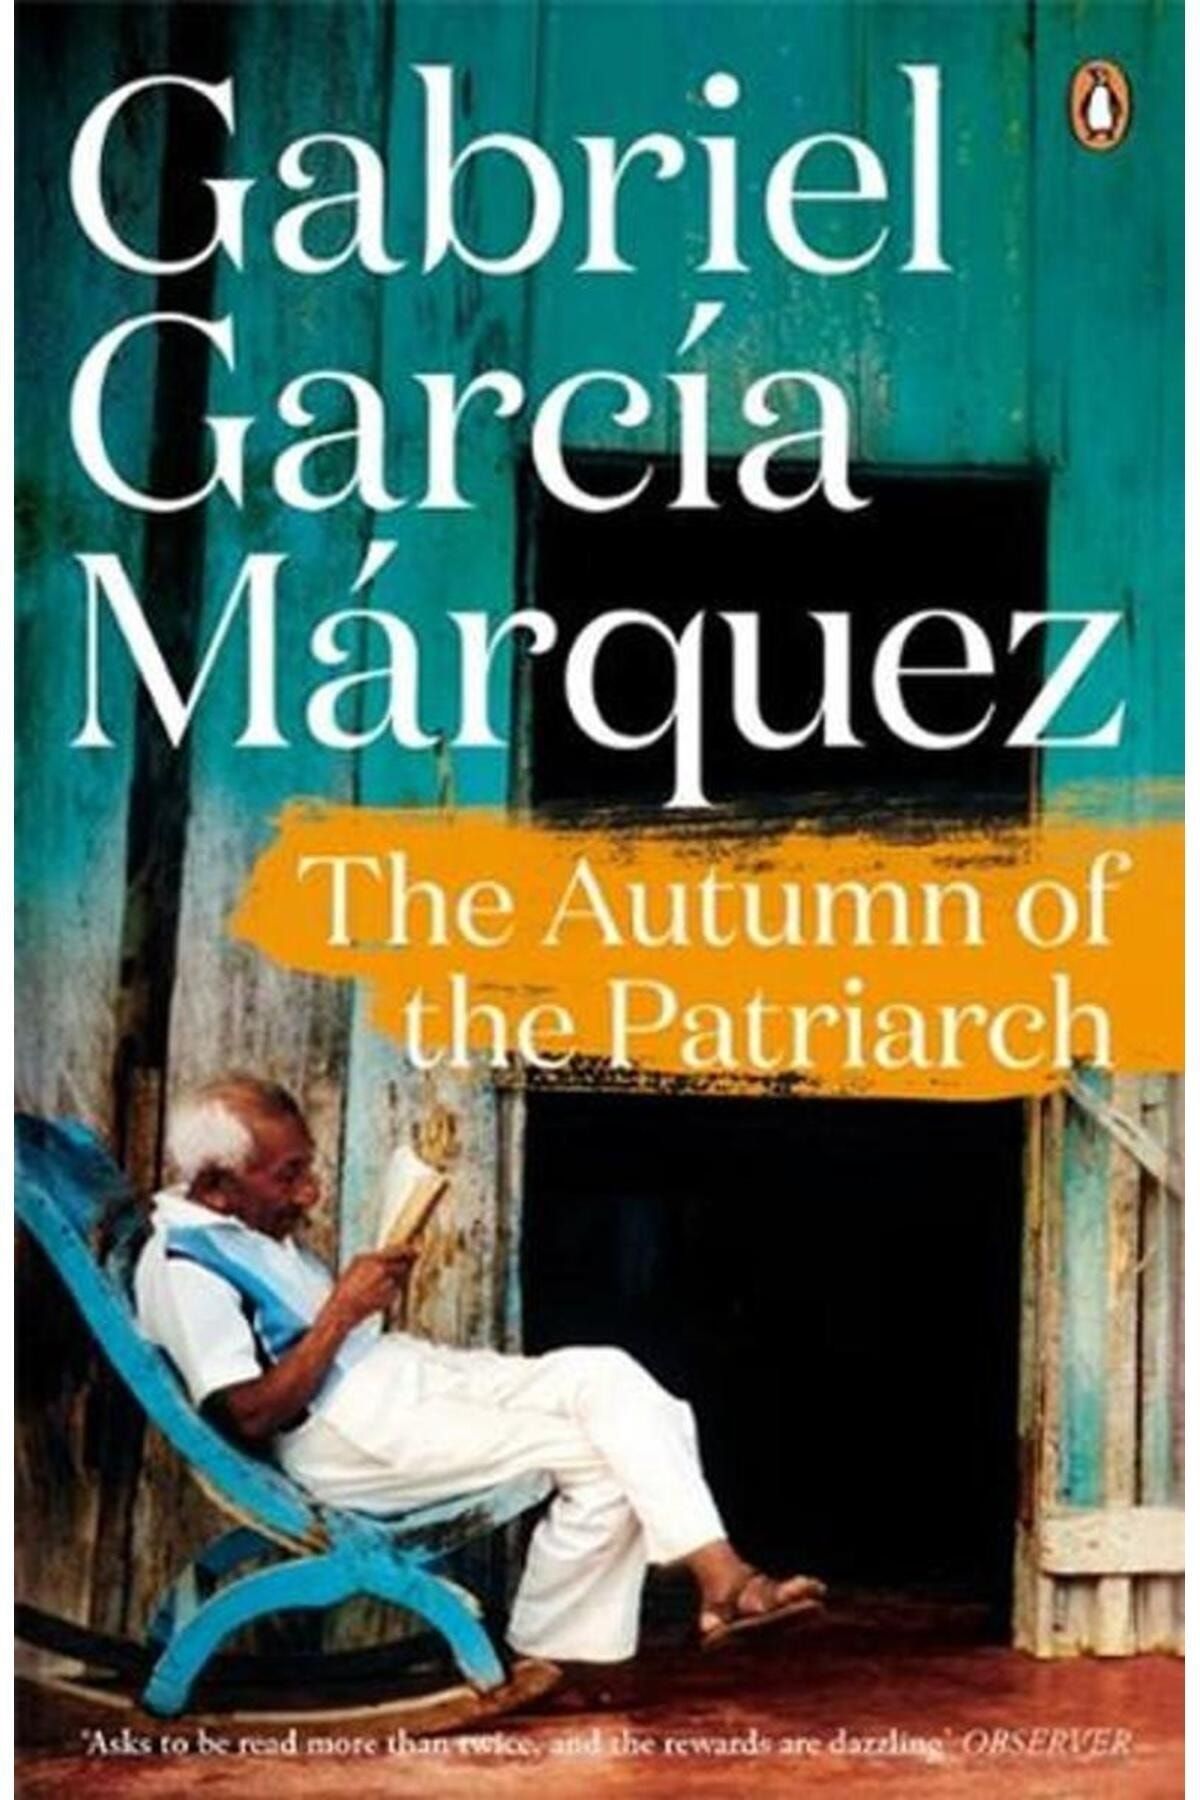 Penguin Books The Autumn of the Patriarch (Marquez 2014)